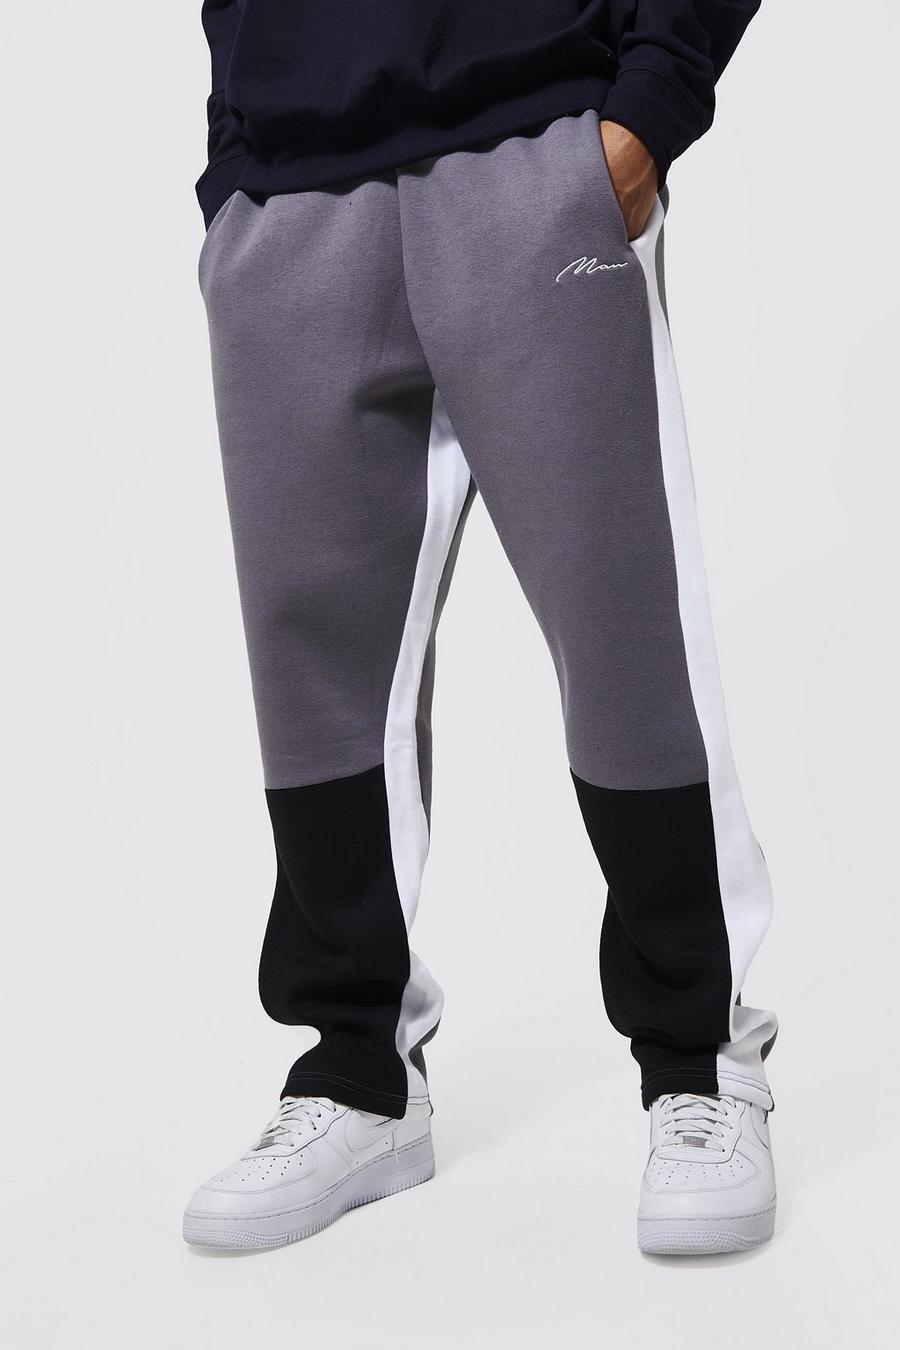 Colorblock Jogginghose mit weitem Bein, Charcoal gris image number 1